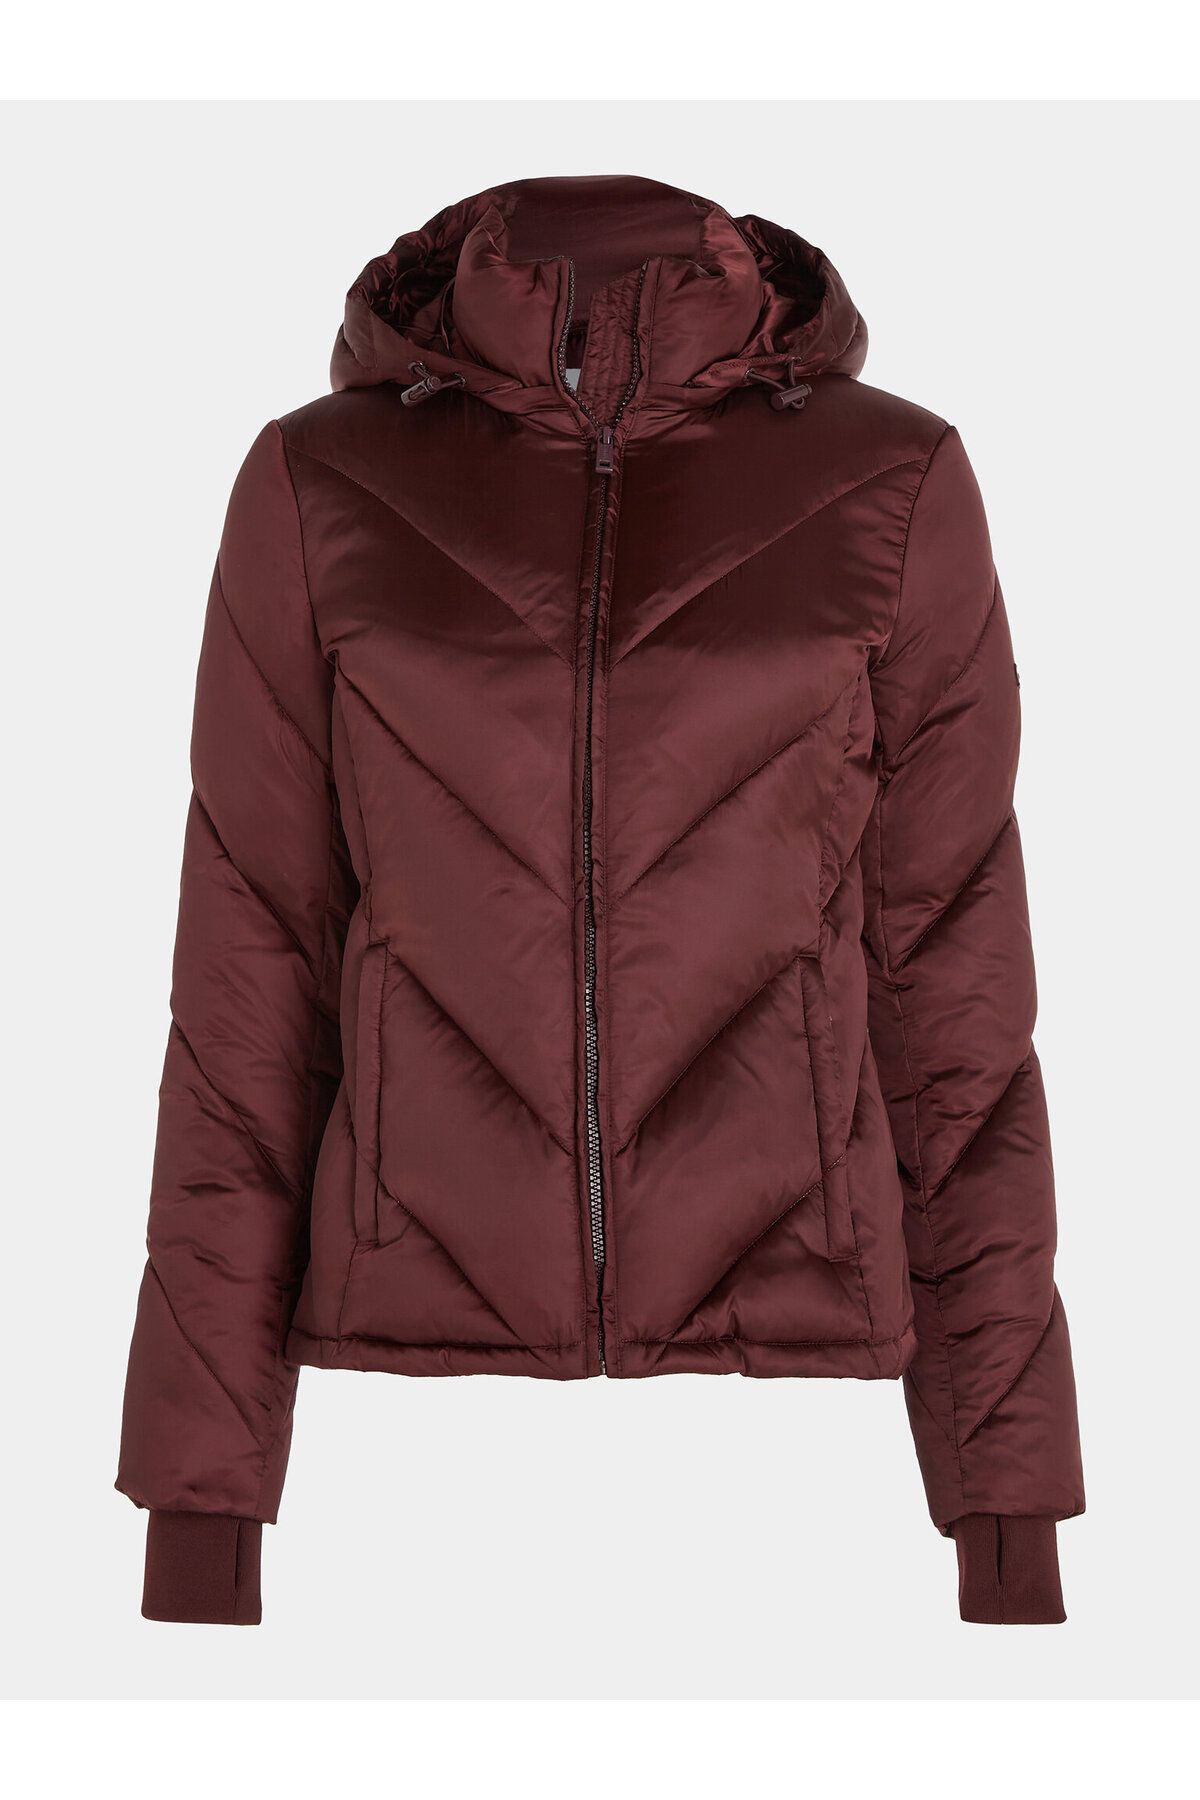 Calvin Klein Burgundy - Winter - Jacket - Relaxed fit Trendyol